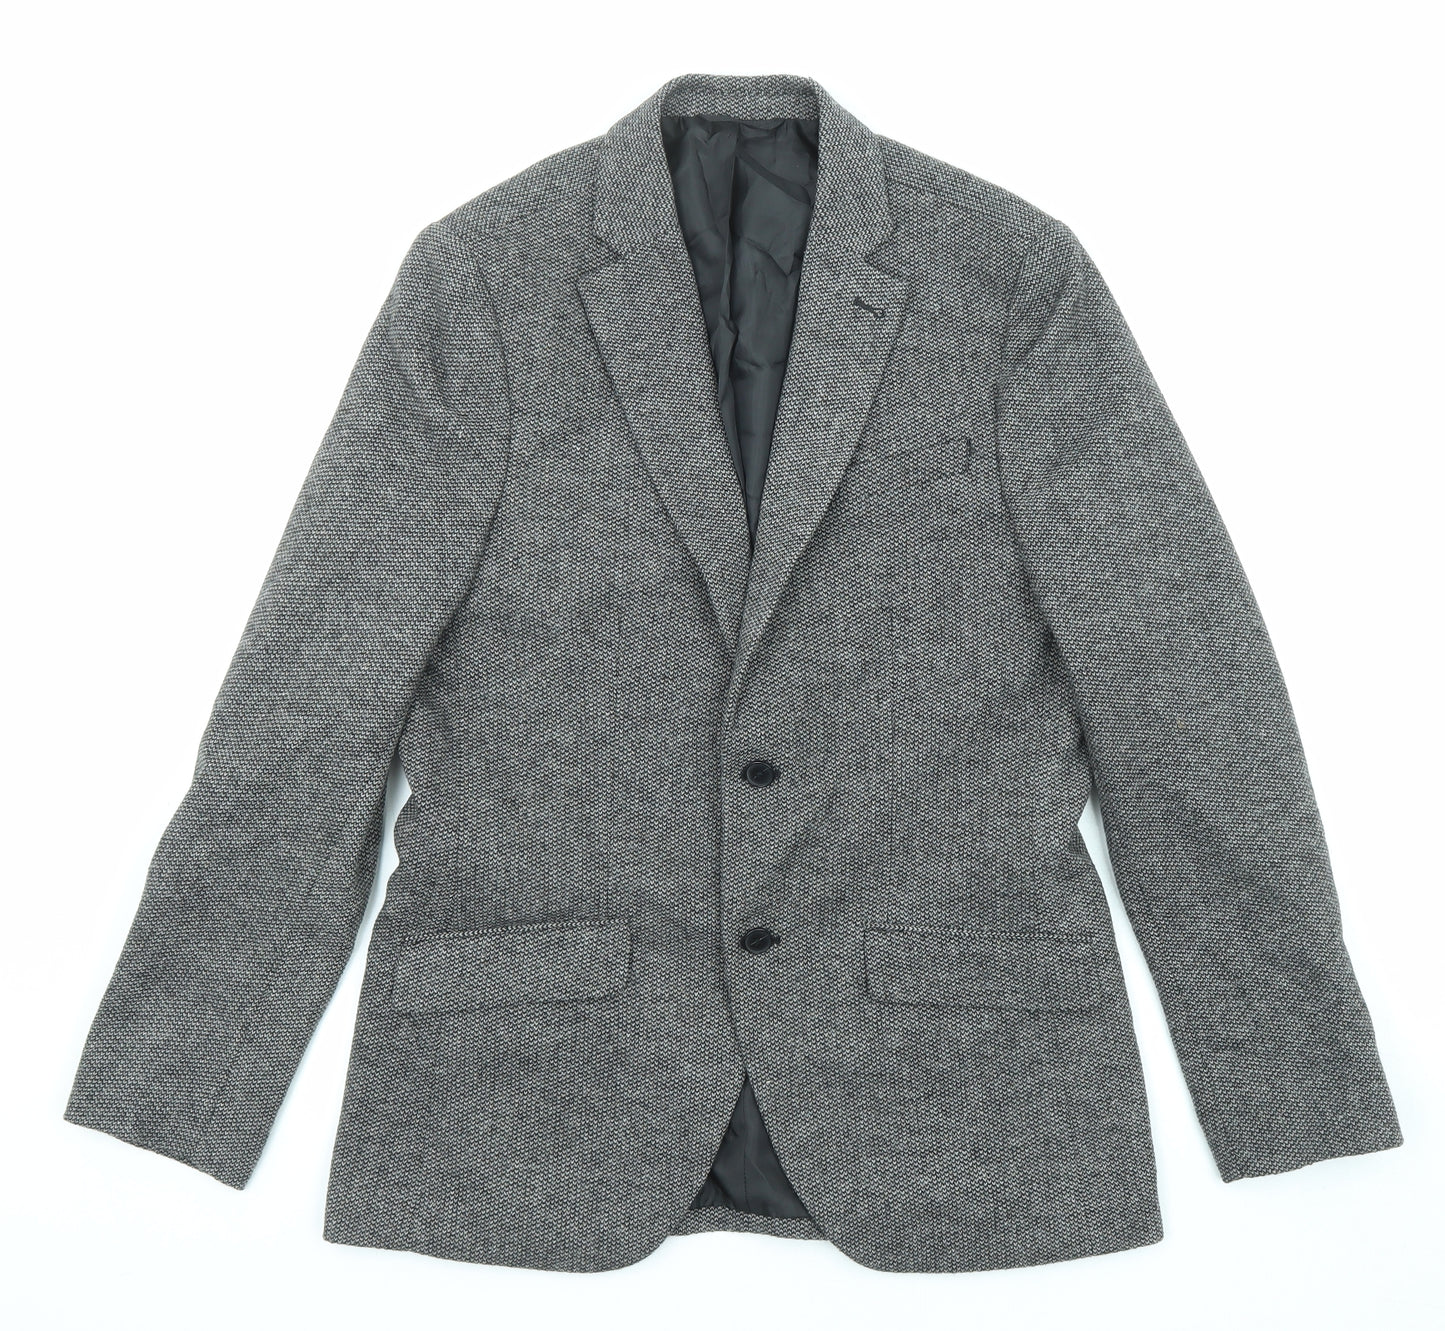 Debenhams Mens Grey Geometric Polyester Jacket Suit Jacket Size 38 Regular